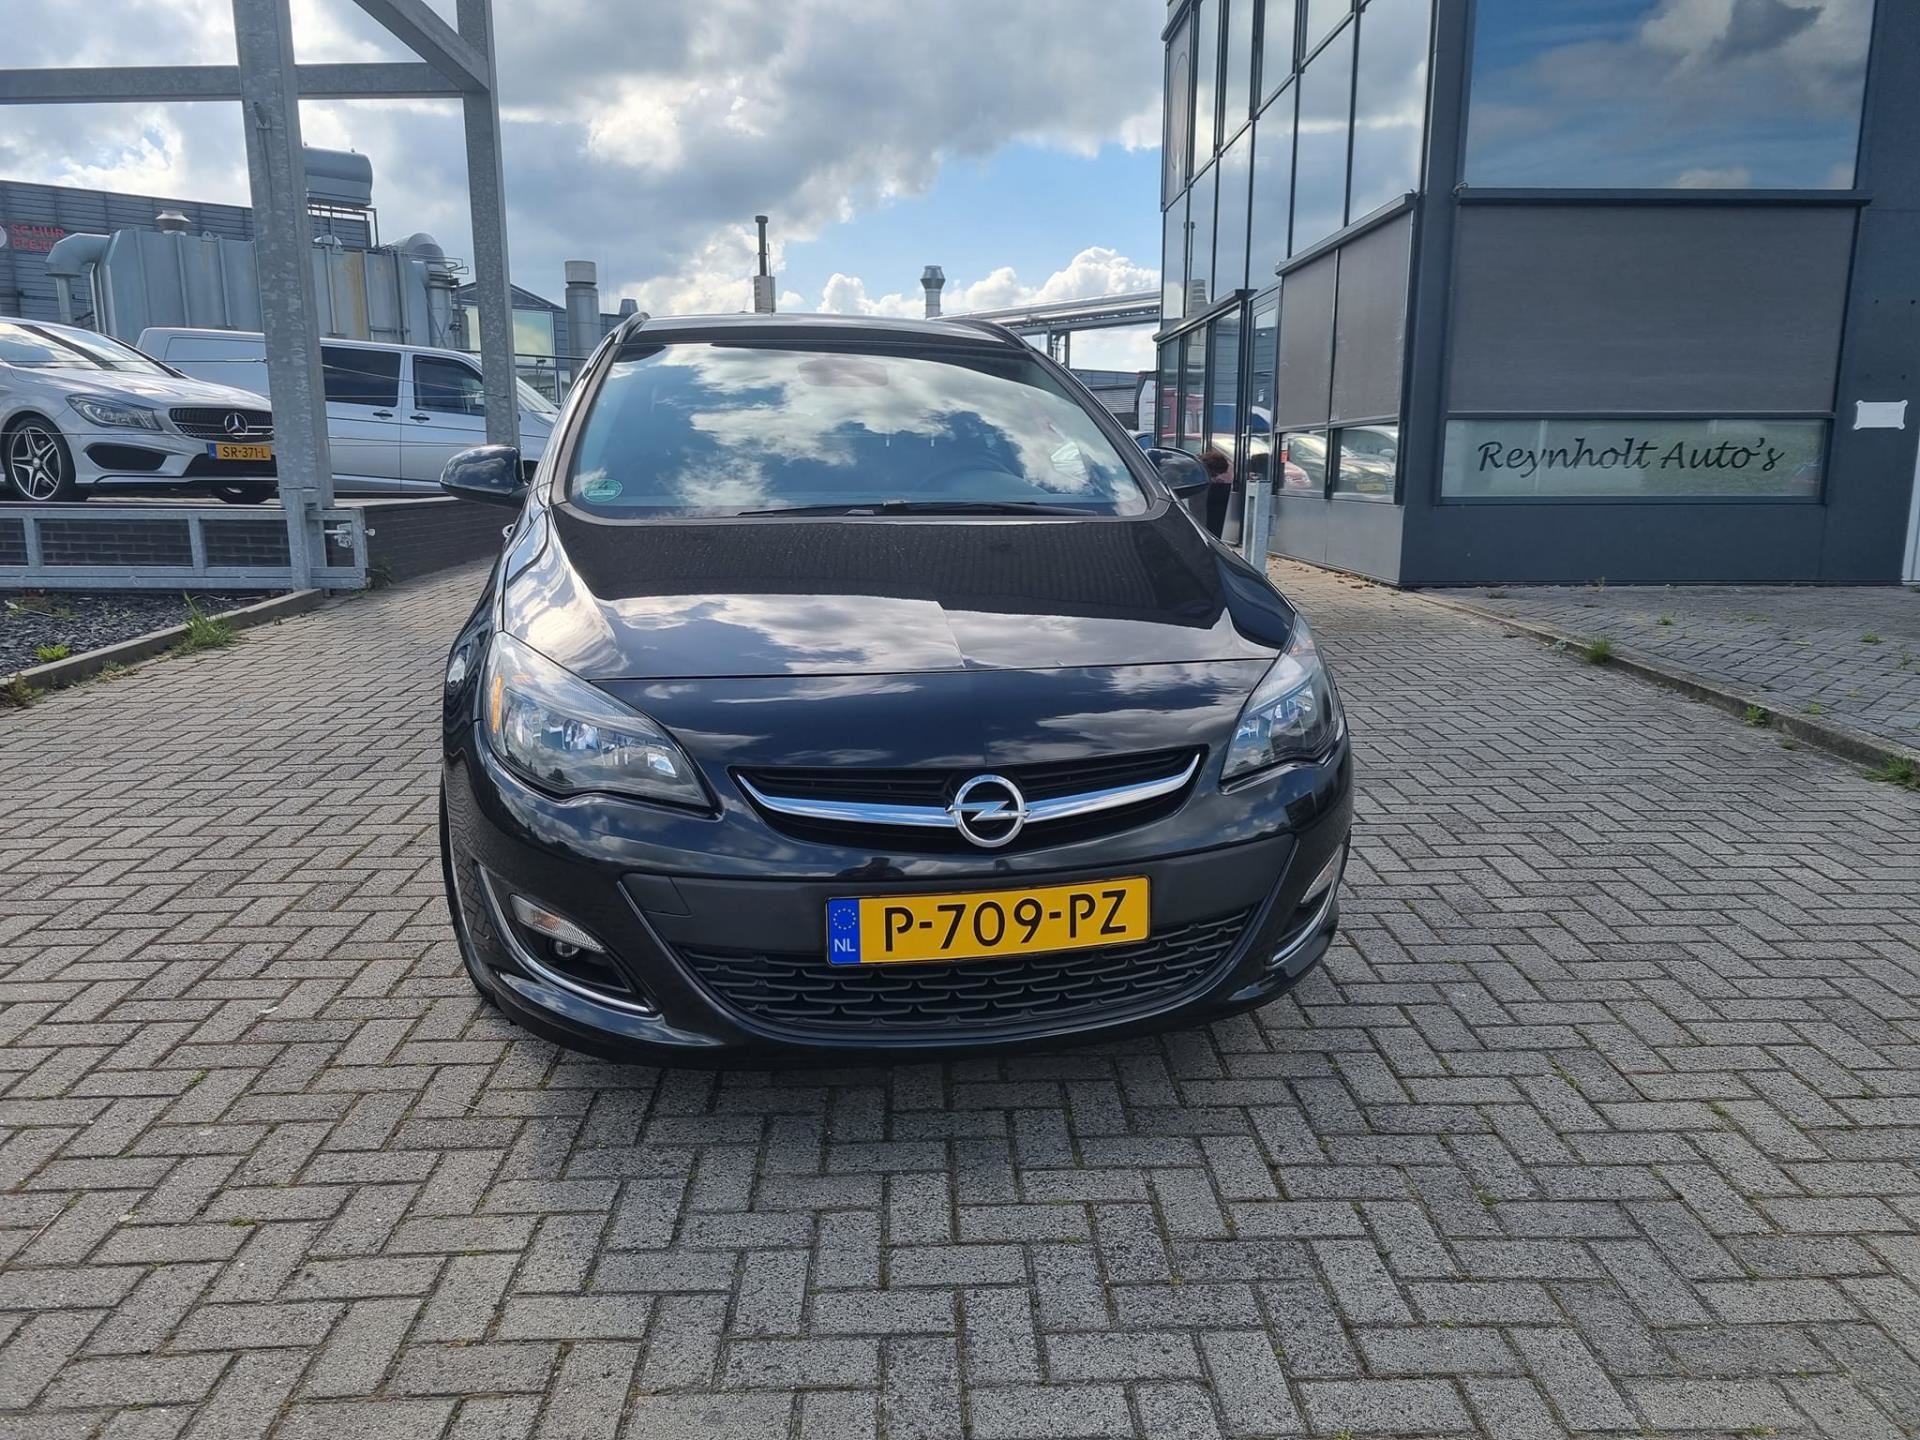 Opel ASTRA SPORTS TOURER occasion - Autobedrijf Reijnholt